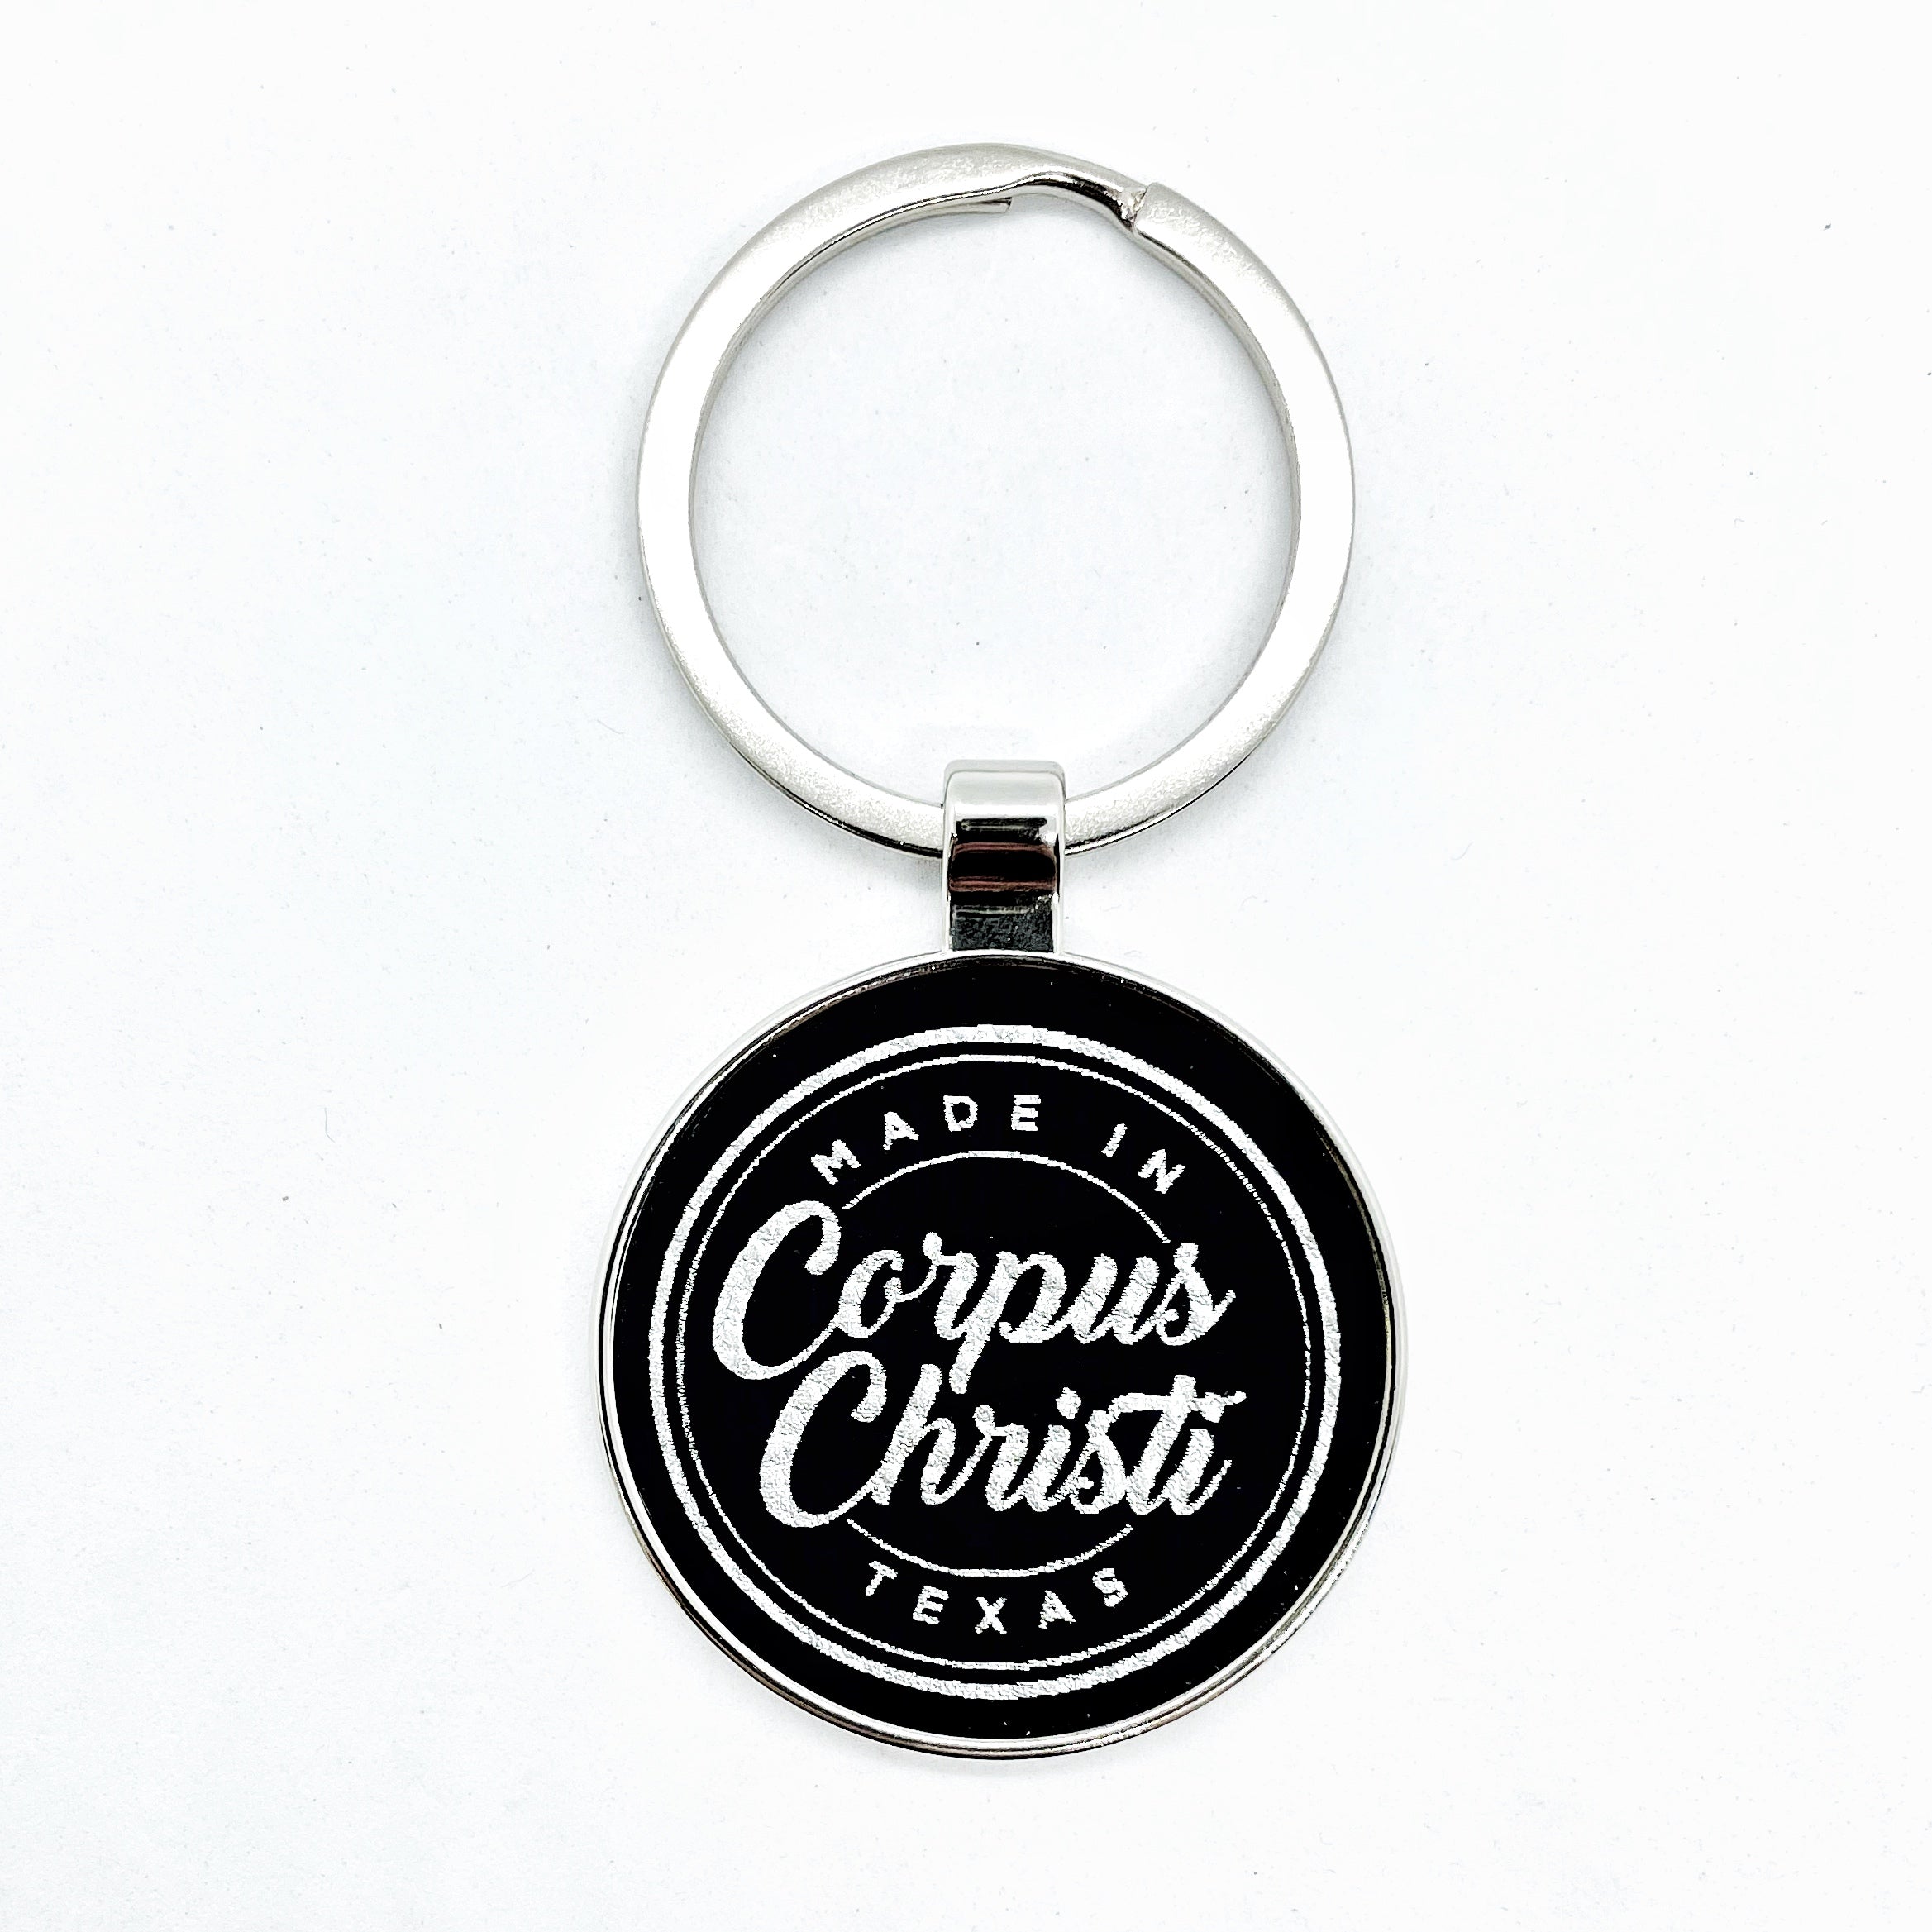 Black/Silver Keychain – Made in Corpus Christi